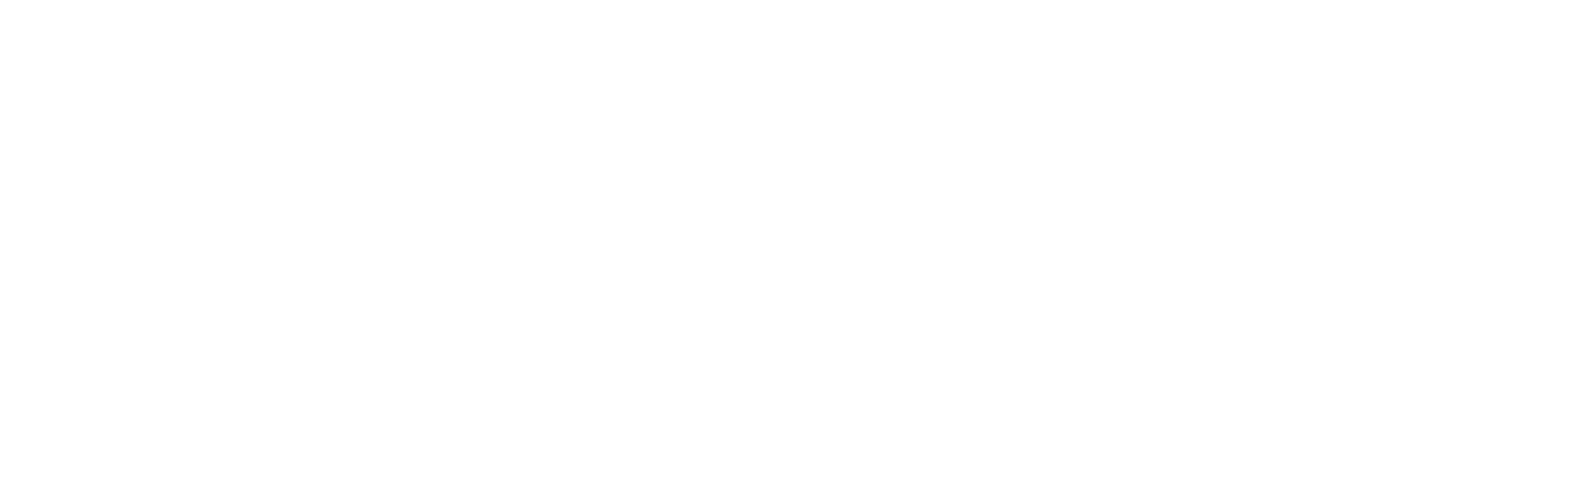 President Chain Store (PSCS) Logo für dunkle Hintergründe (transparentes PNG)